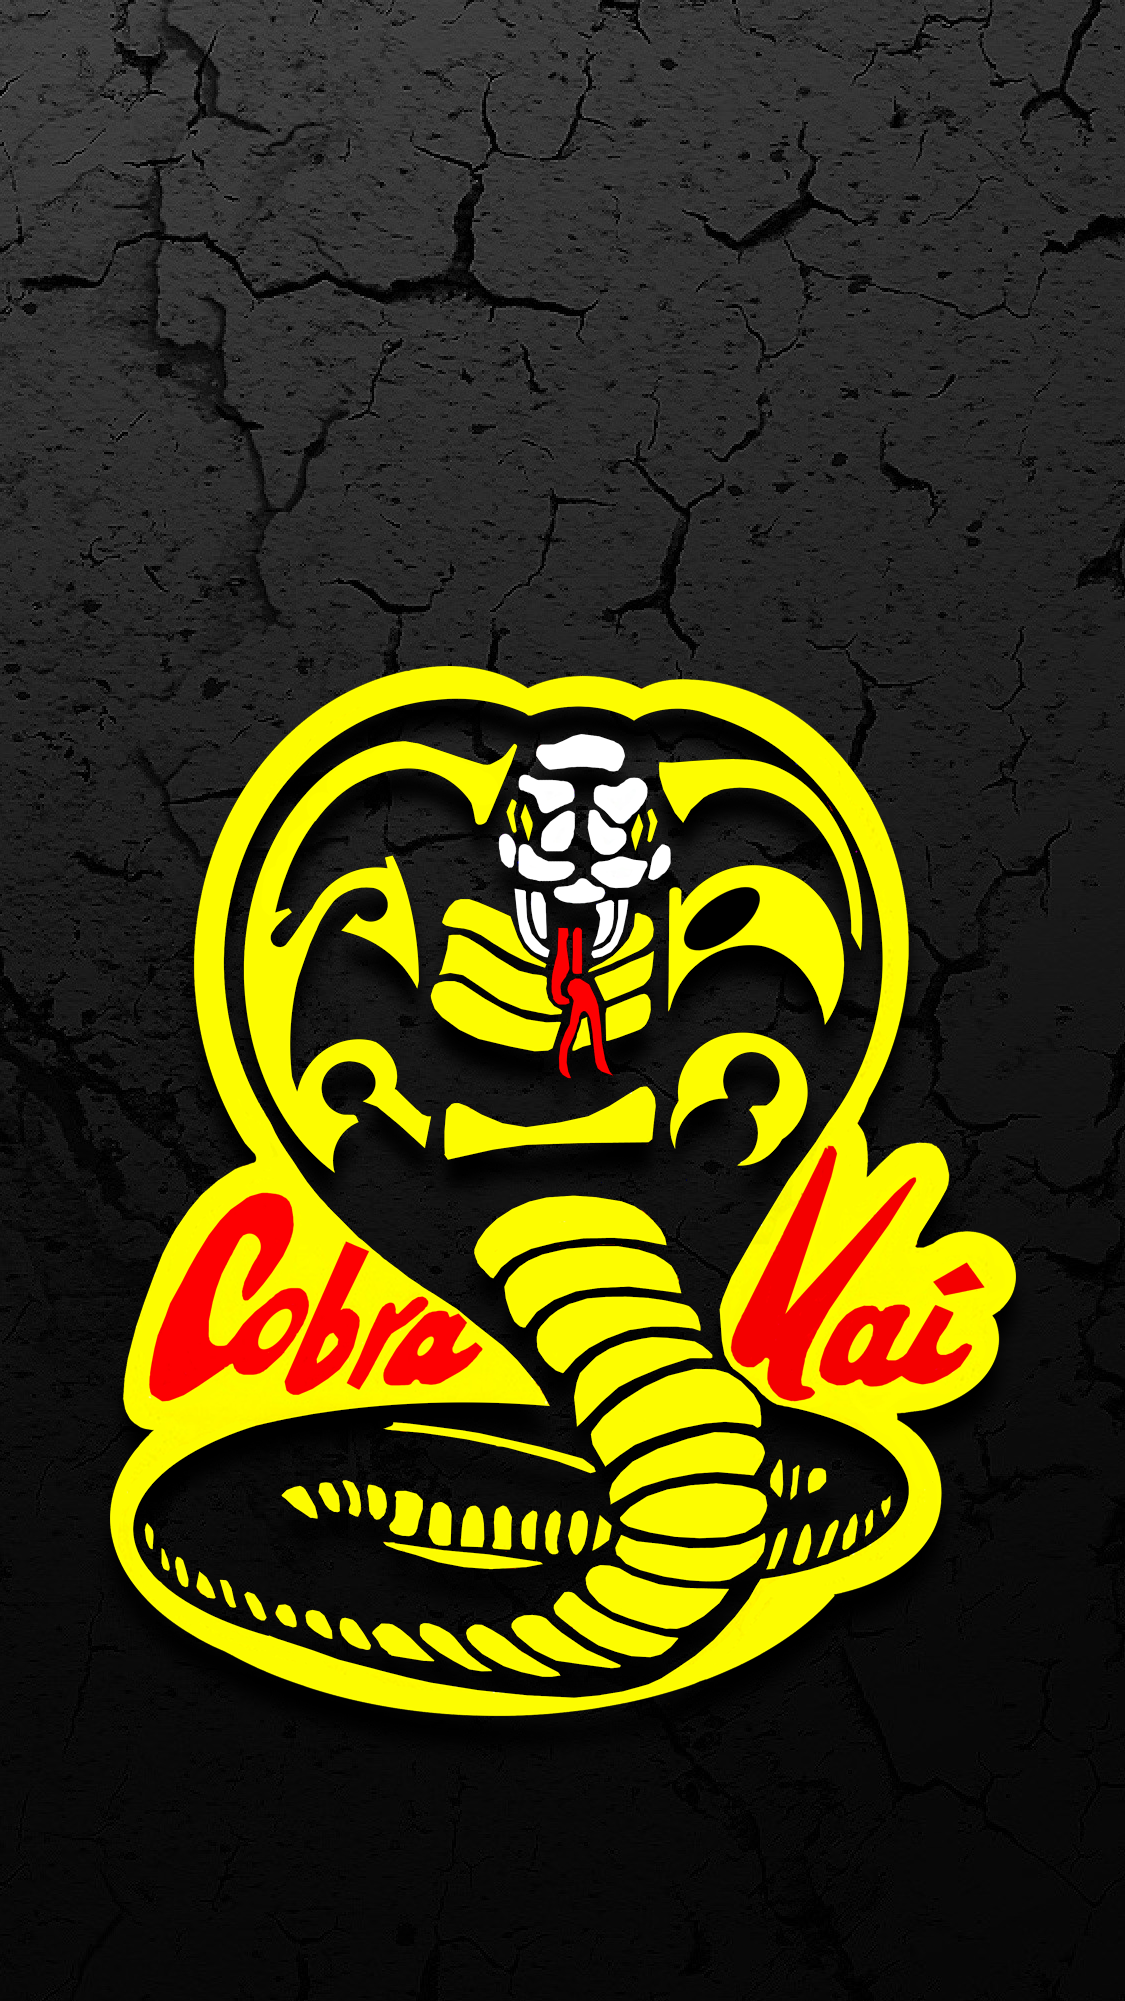 Share 80 cobra kai season 5 wallpaper best  incdgdbentre